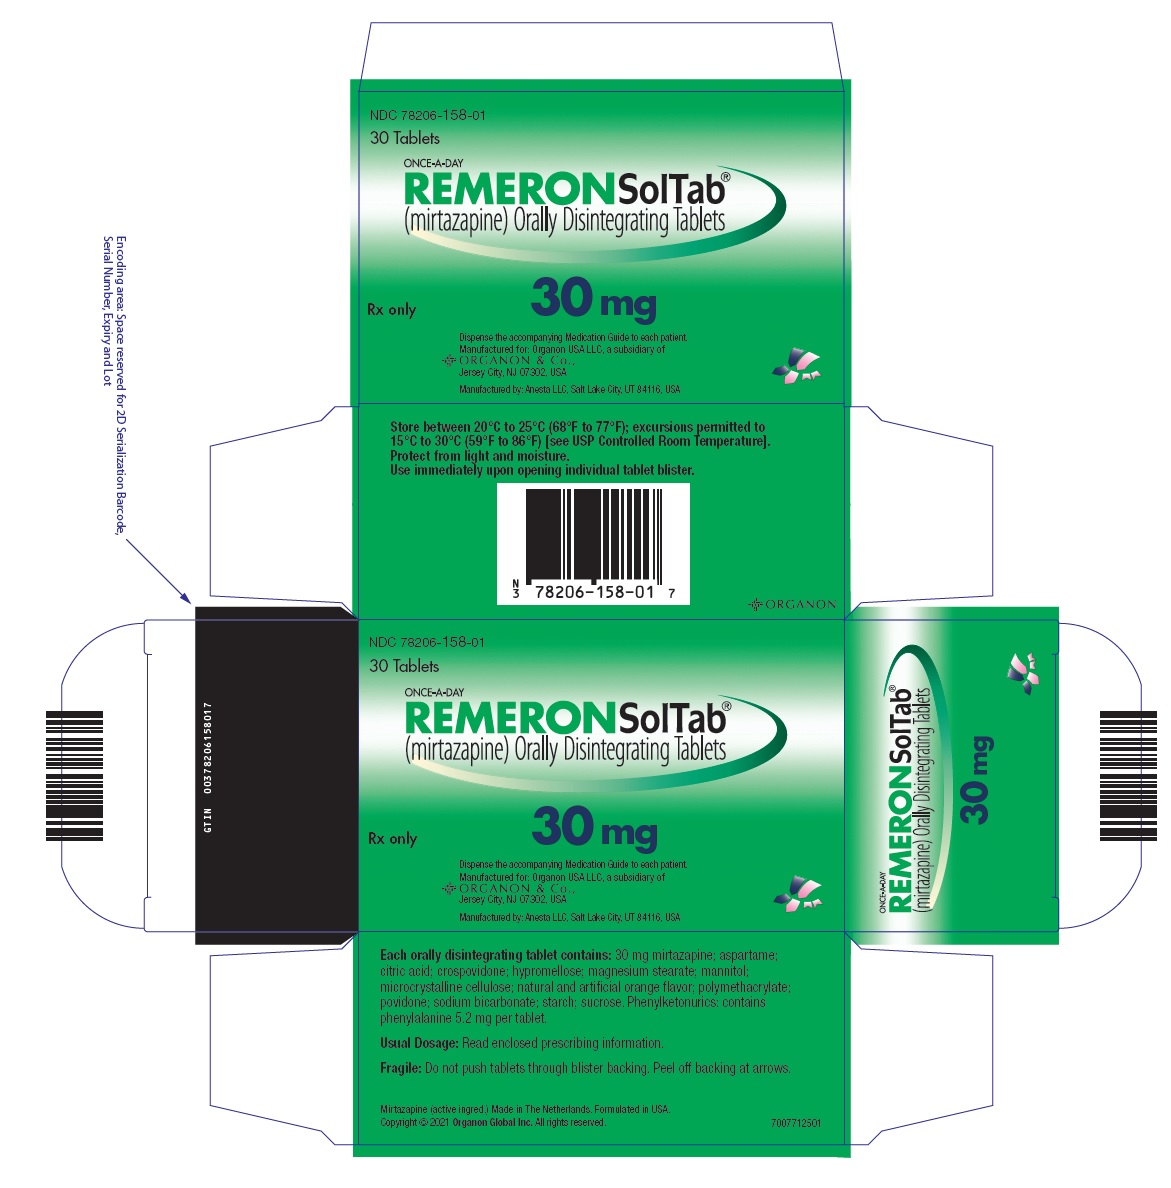 PRINCIPAL DISPLAY PANEL - 30 mg Tablet Blister Pack Box